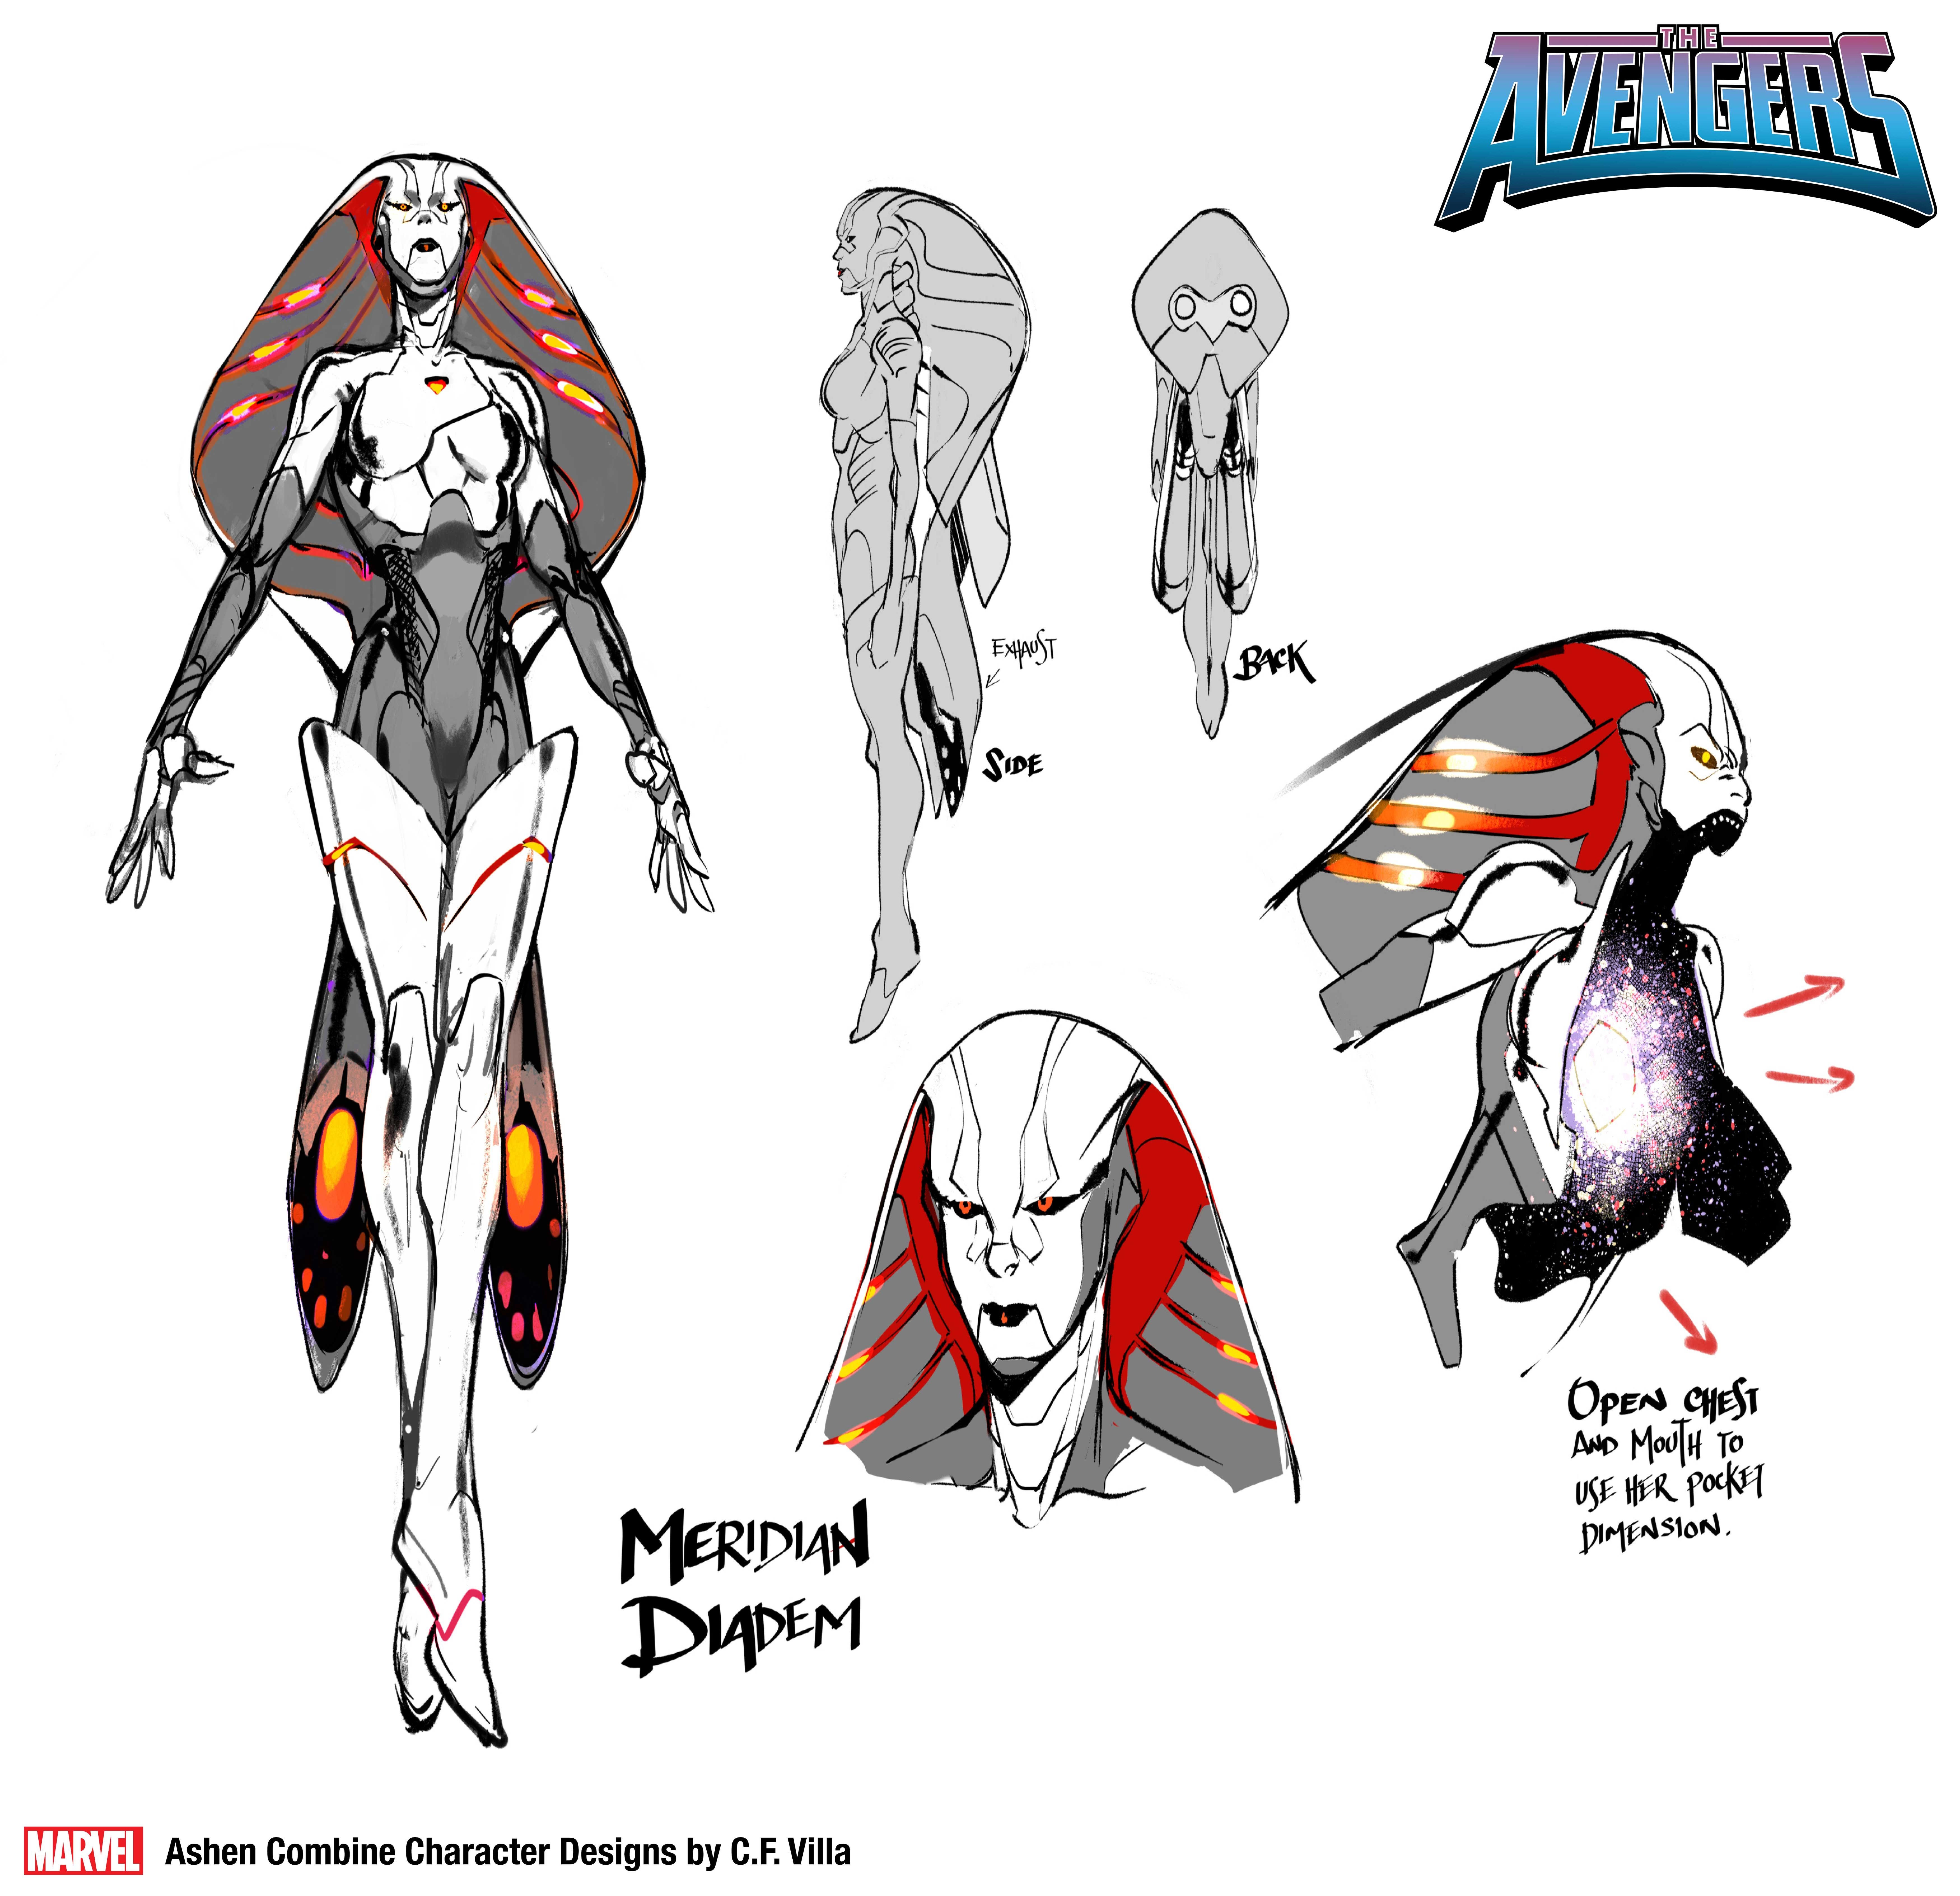 avengers-the-ashen-combine-meridan-diadem-design.jpg